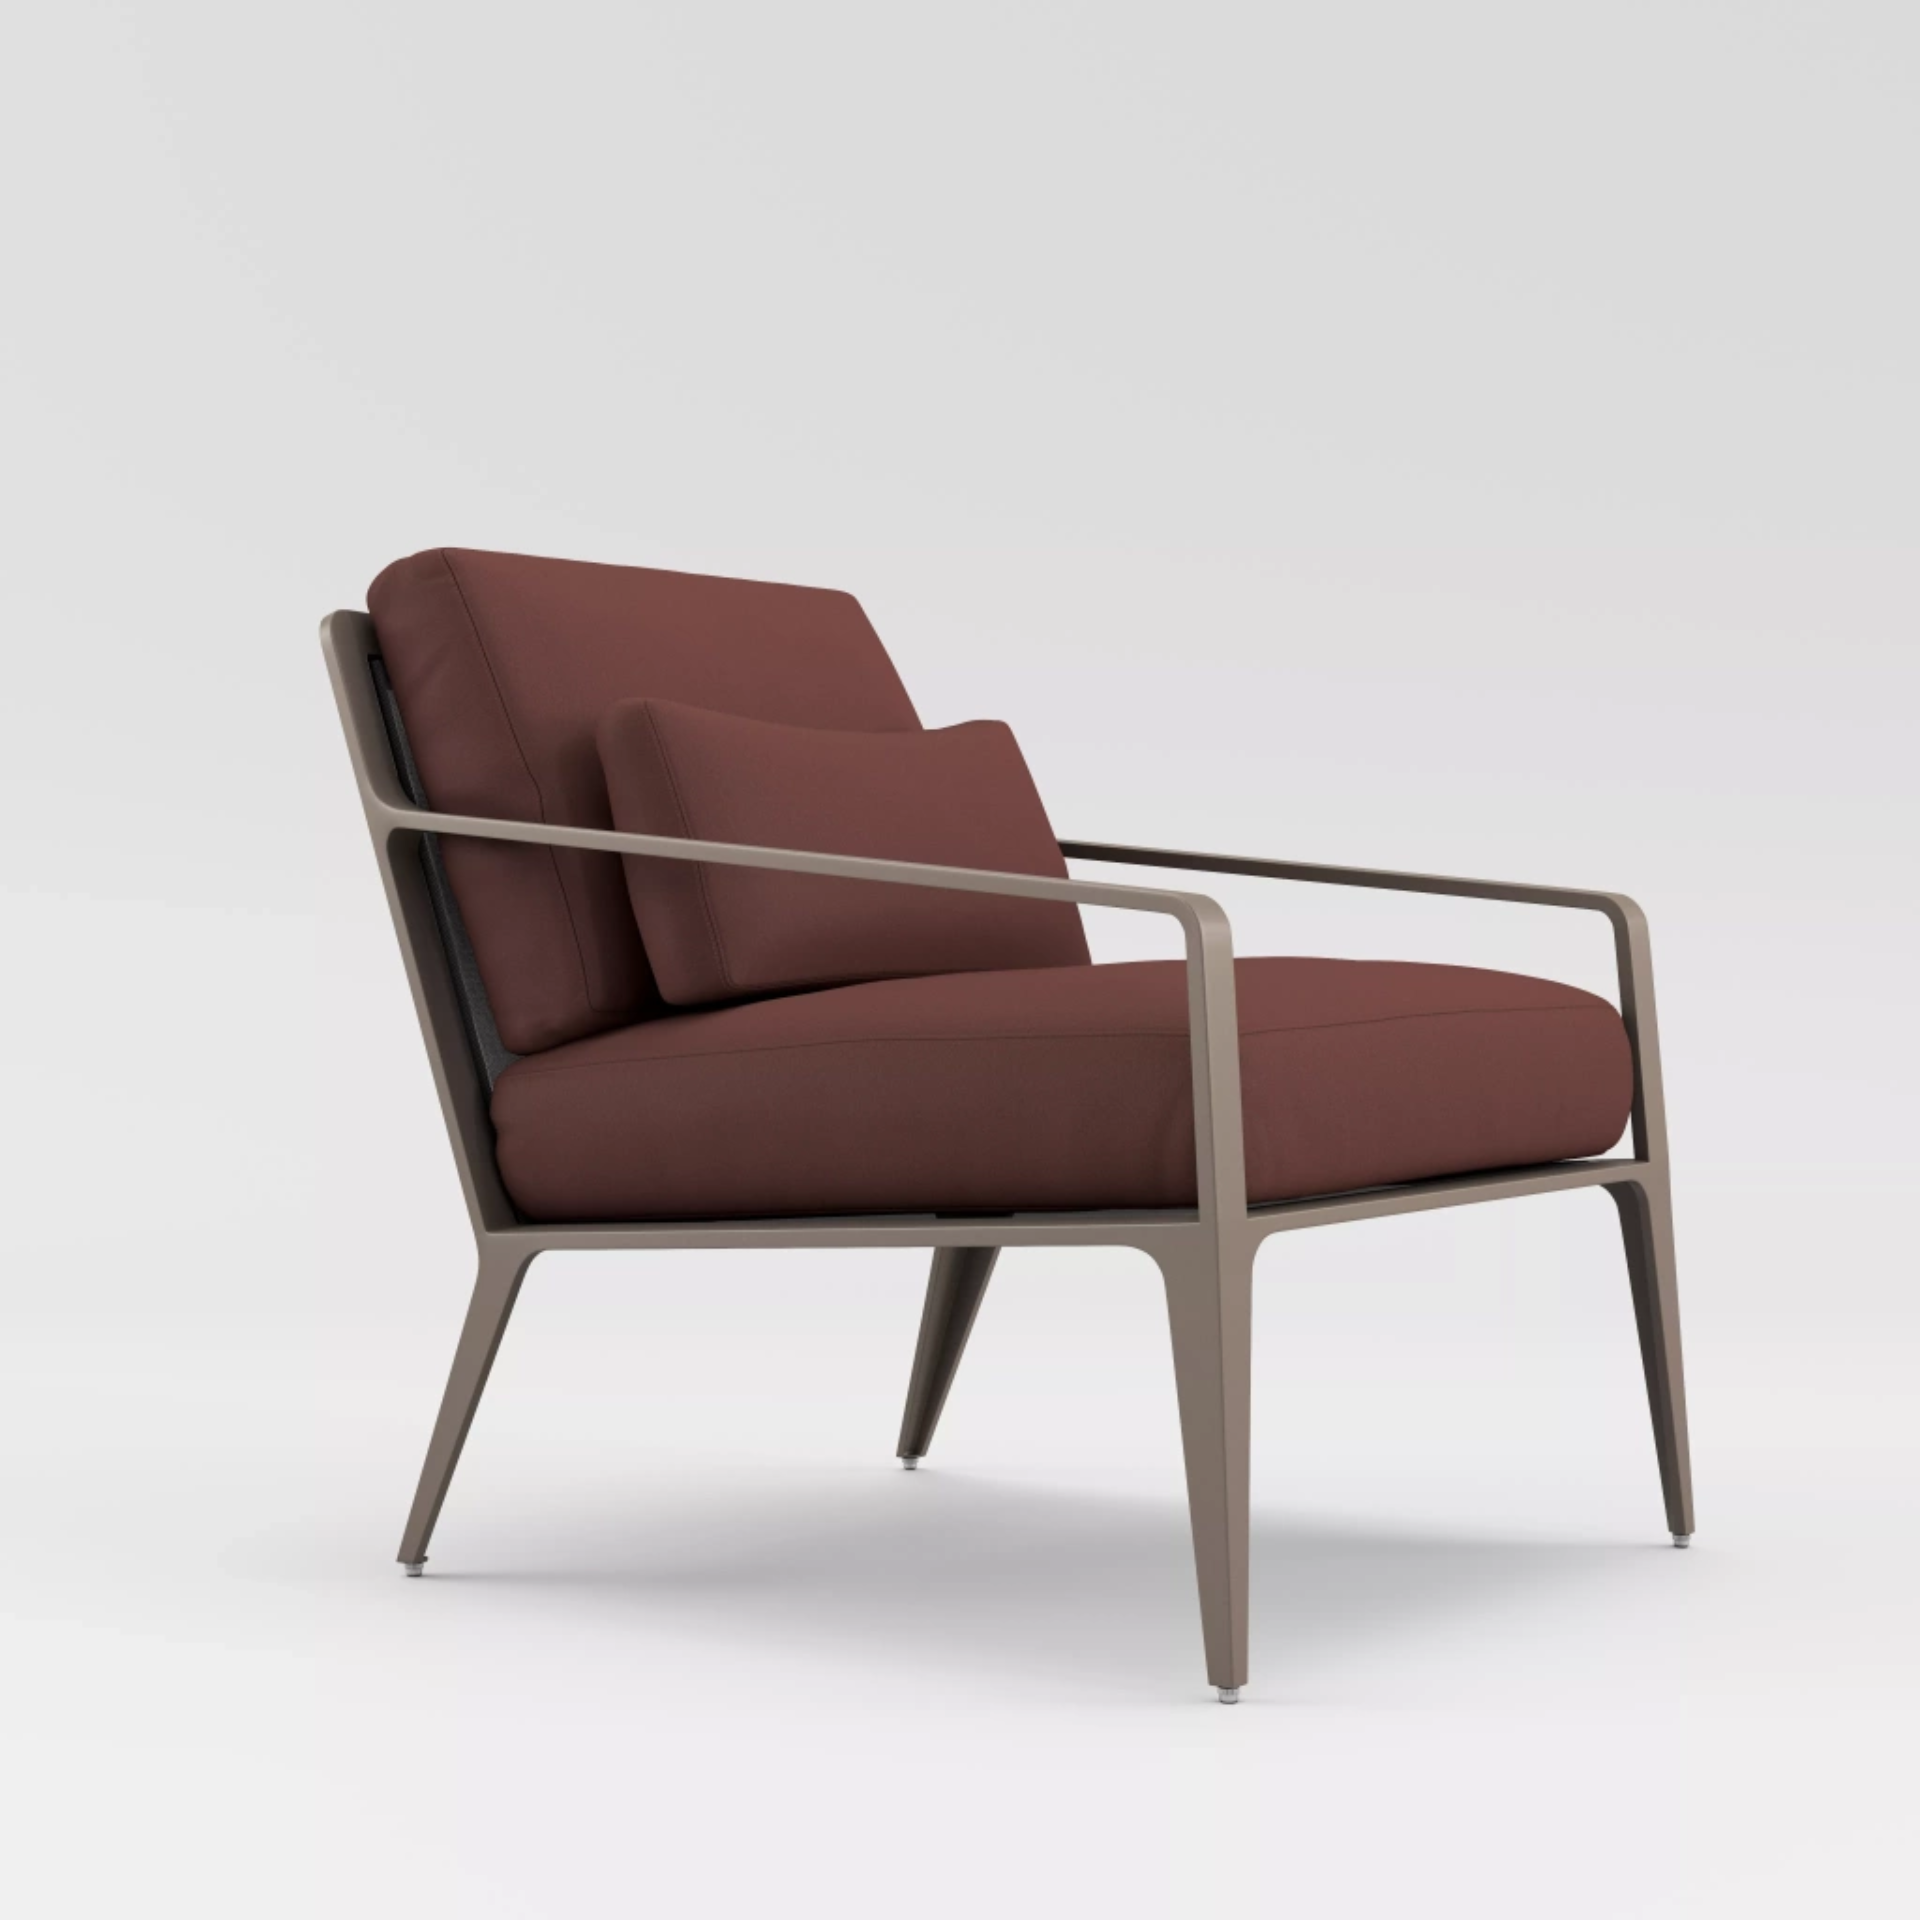 Still Lounge Chair by Brown Jordan